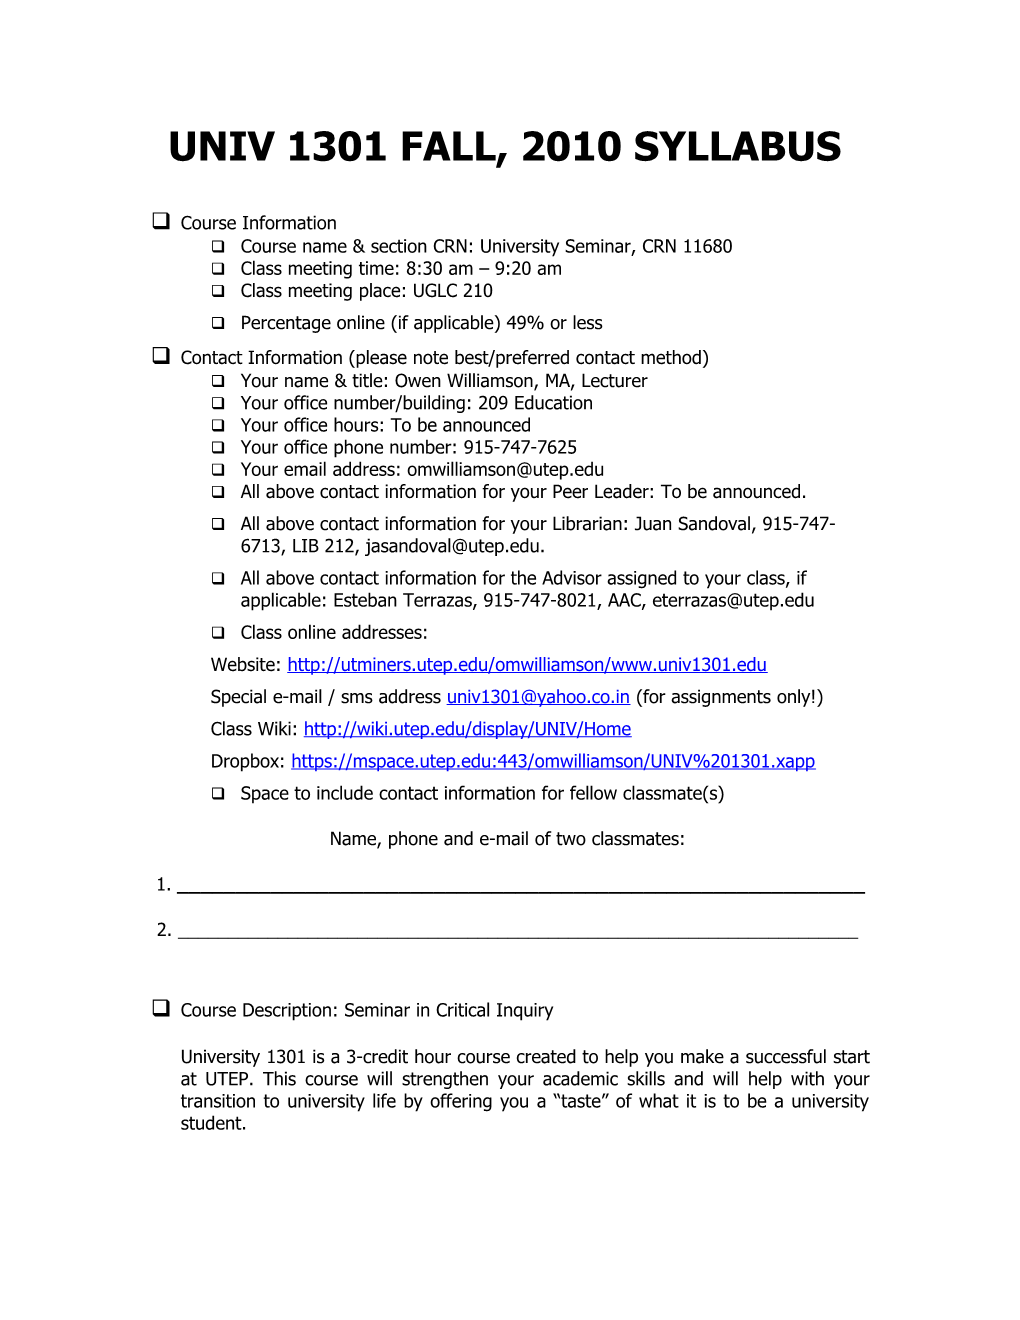 UNIV 1301 FALL, 2010 SYLLABUS (Tentative)